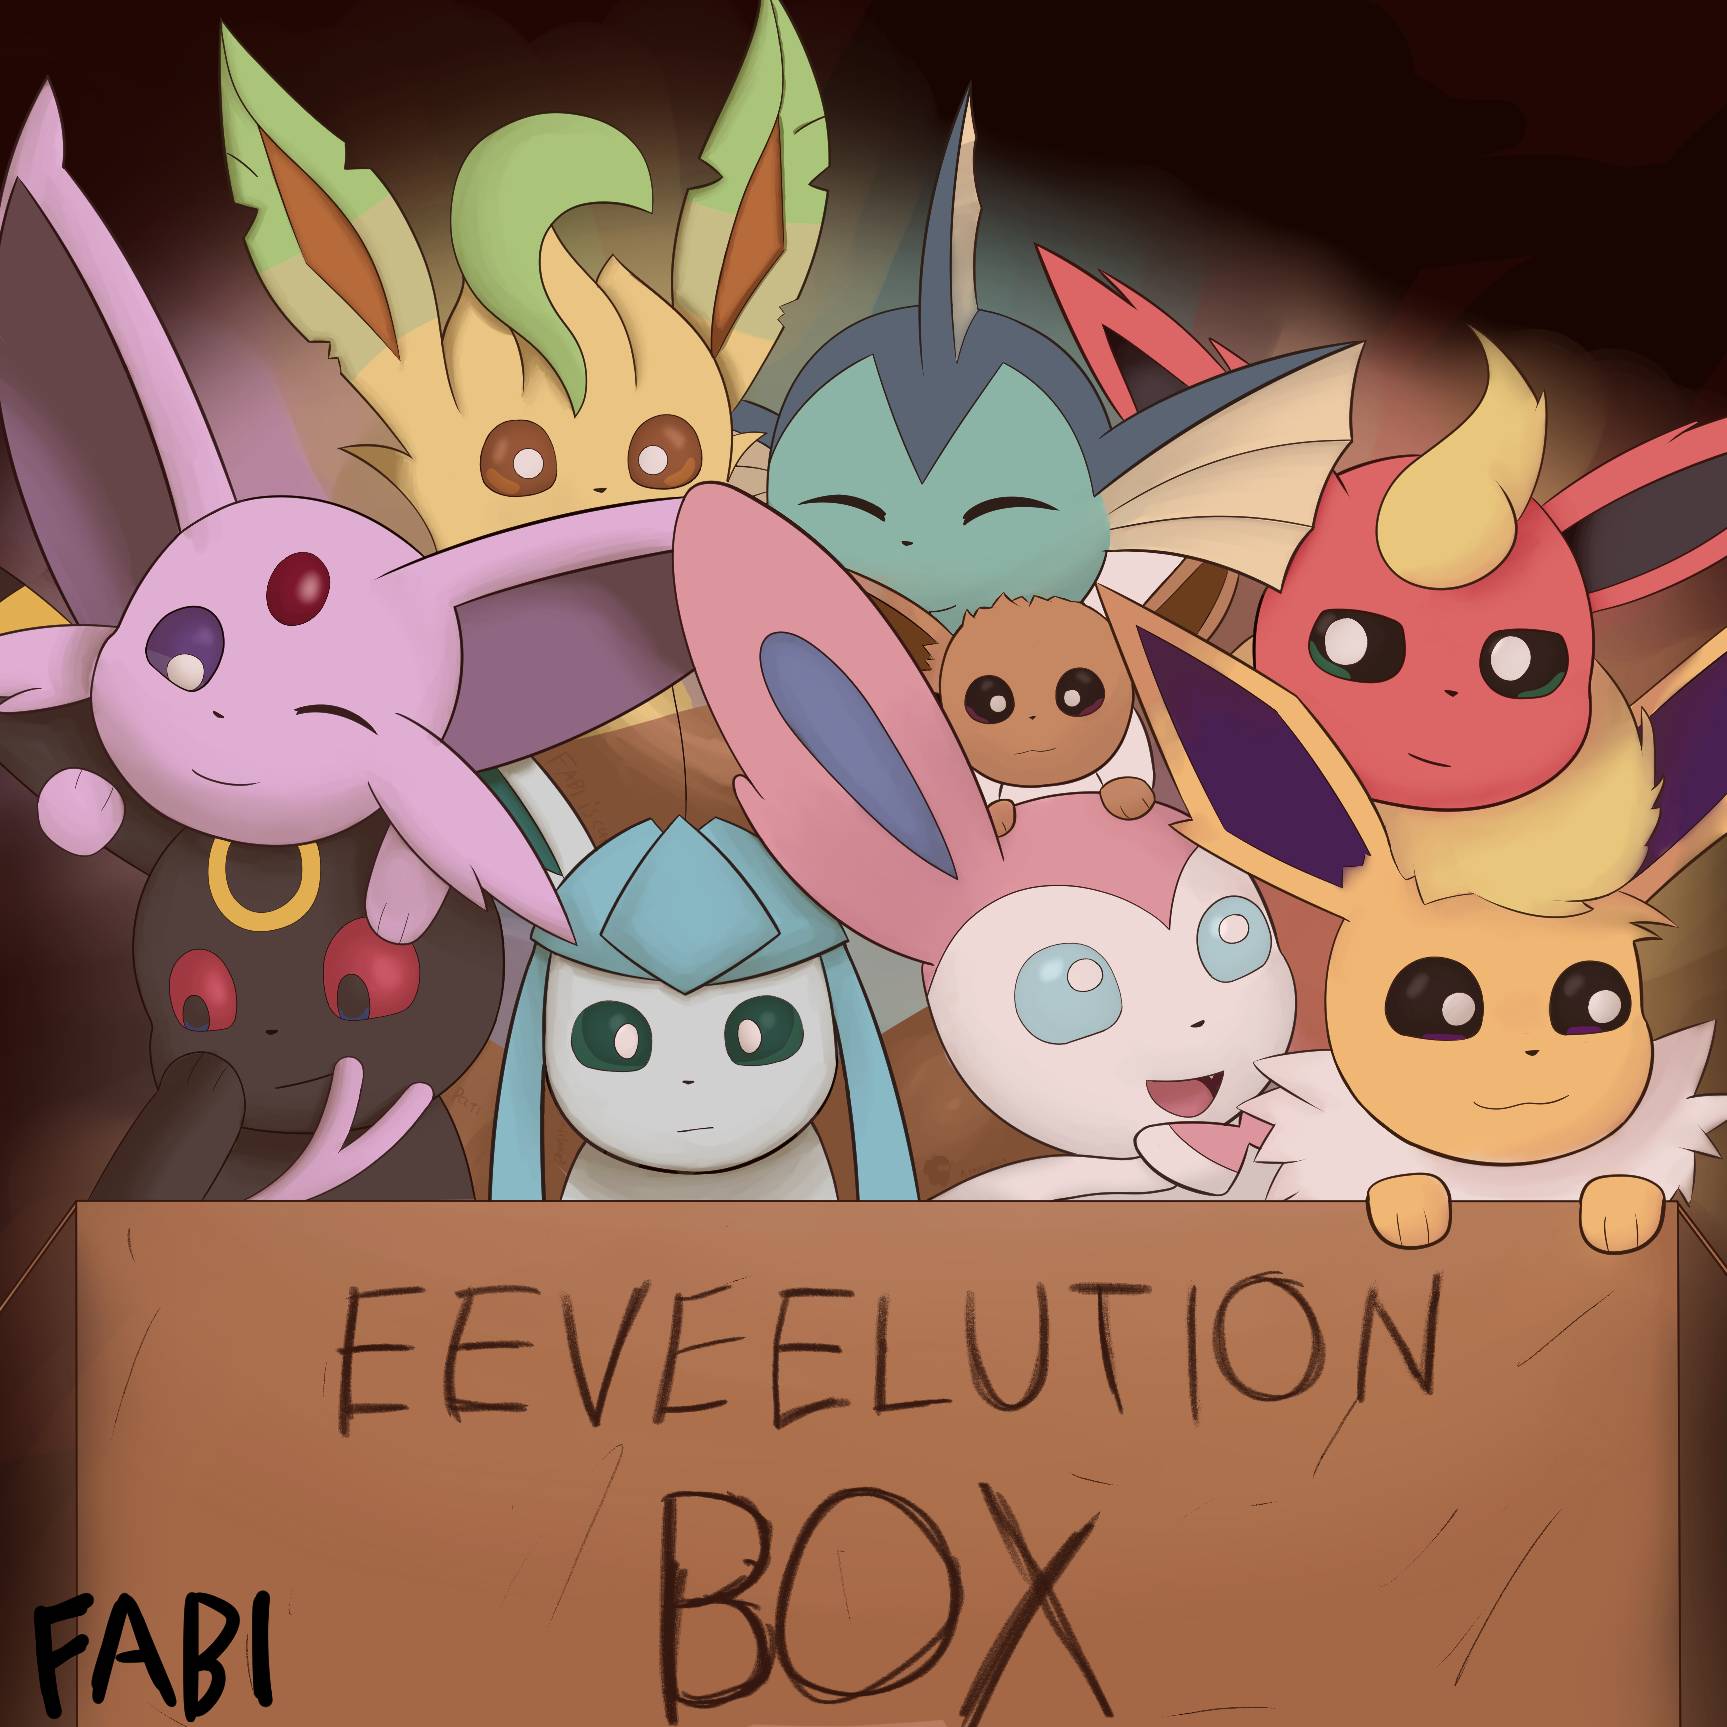 Box of eeveelutions by gaykittens on DeviantArt